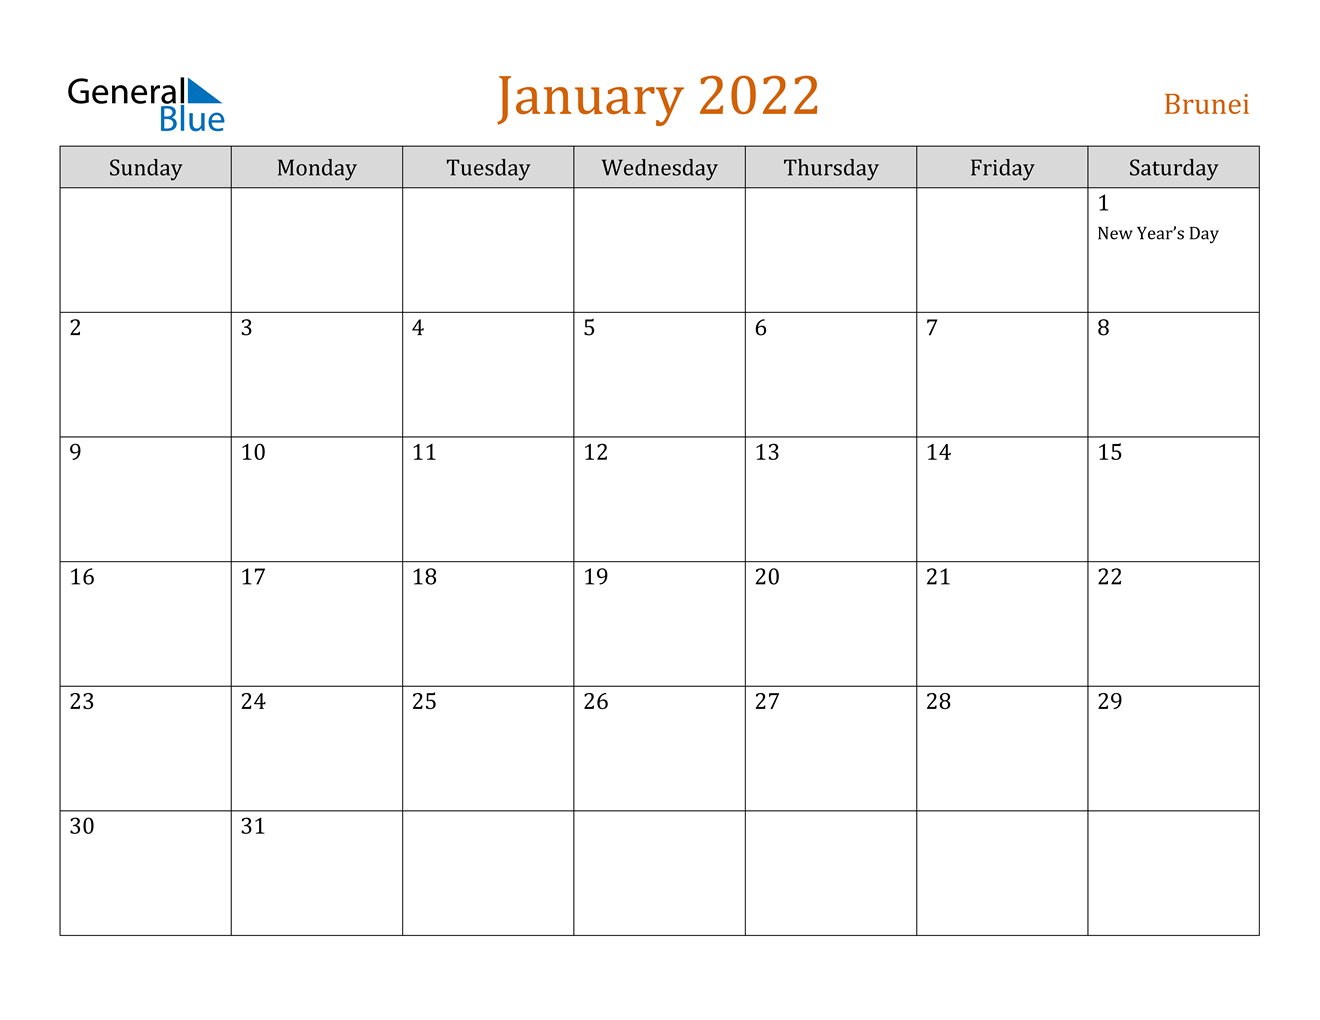 January 2022 Calendar - Brunei